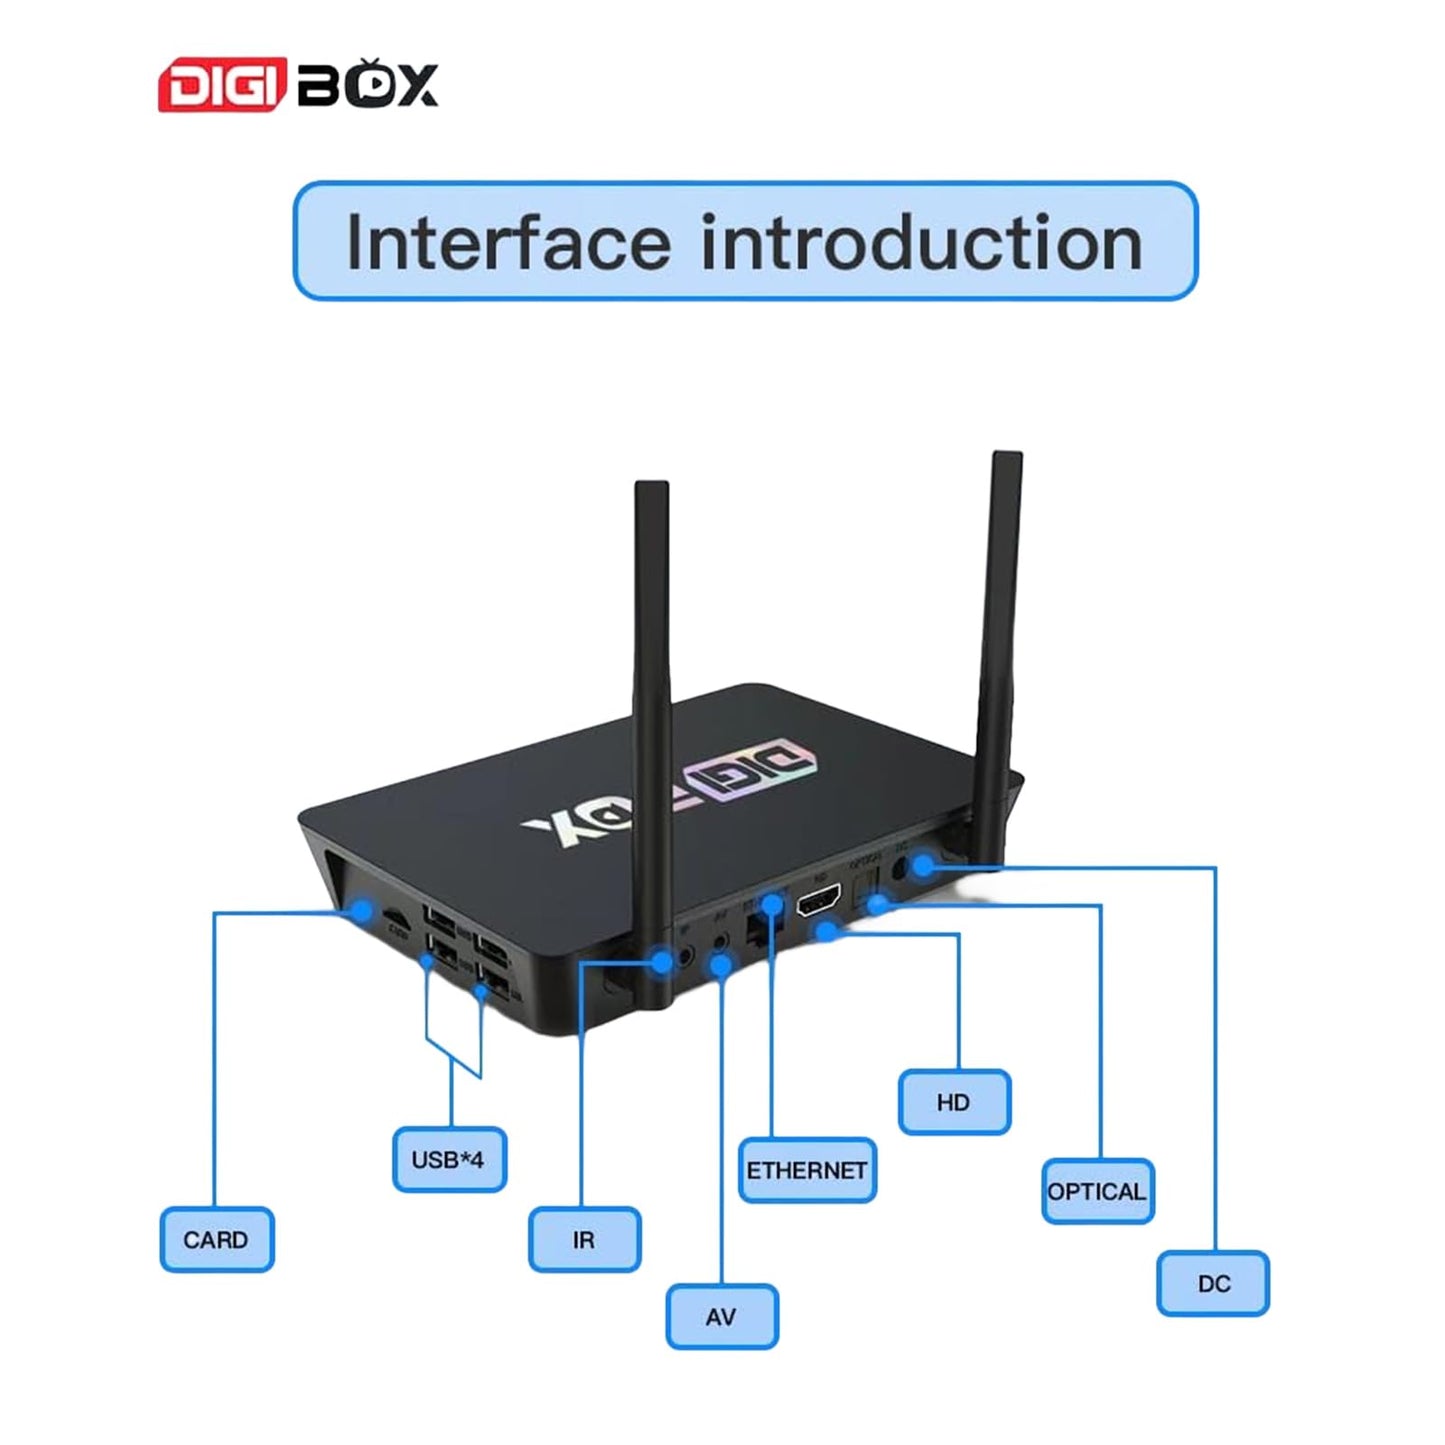 Digibox D3 Plus connectivity:4 USB ports, IR, Ethernet, AV, HD, Optical, DC inputs for versatile use.